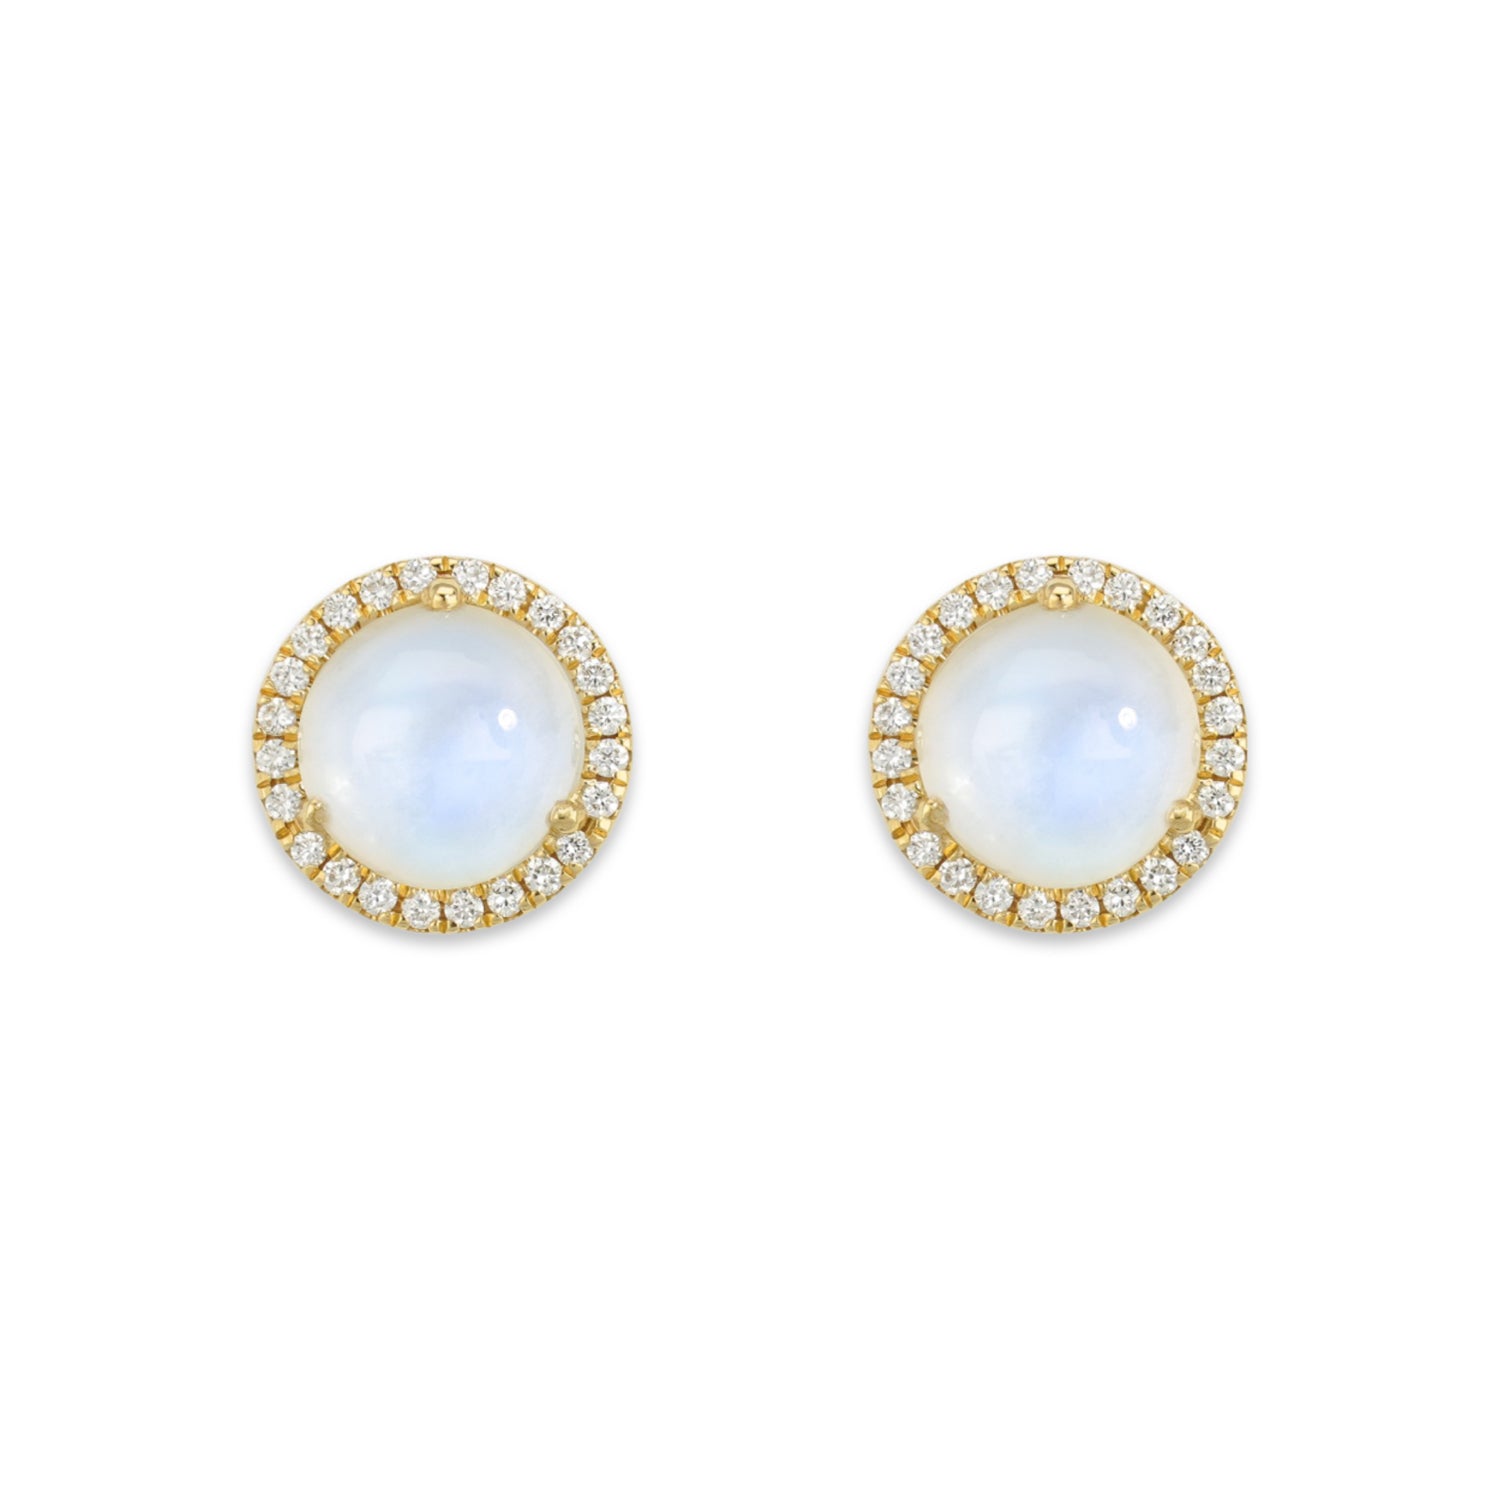 14k Yellow Gold Diamond and Moonstone Earrings